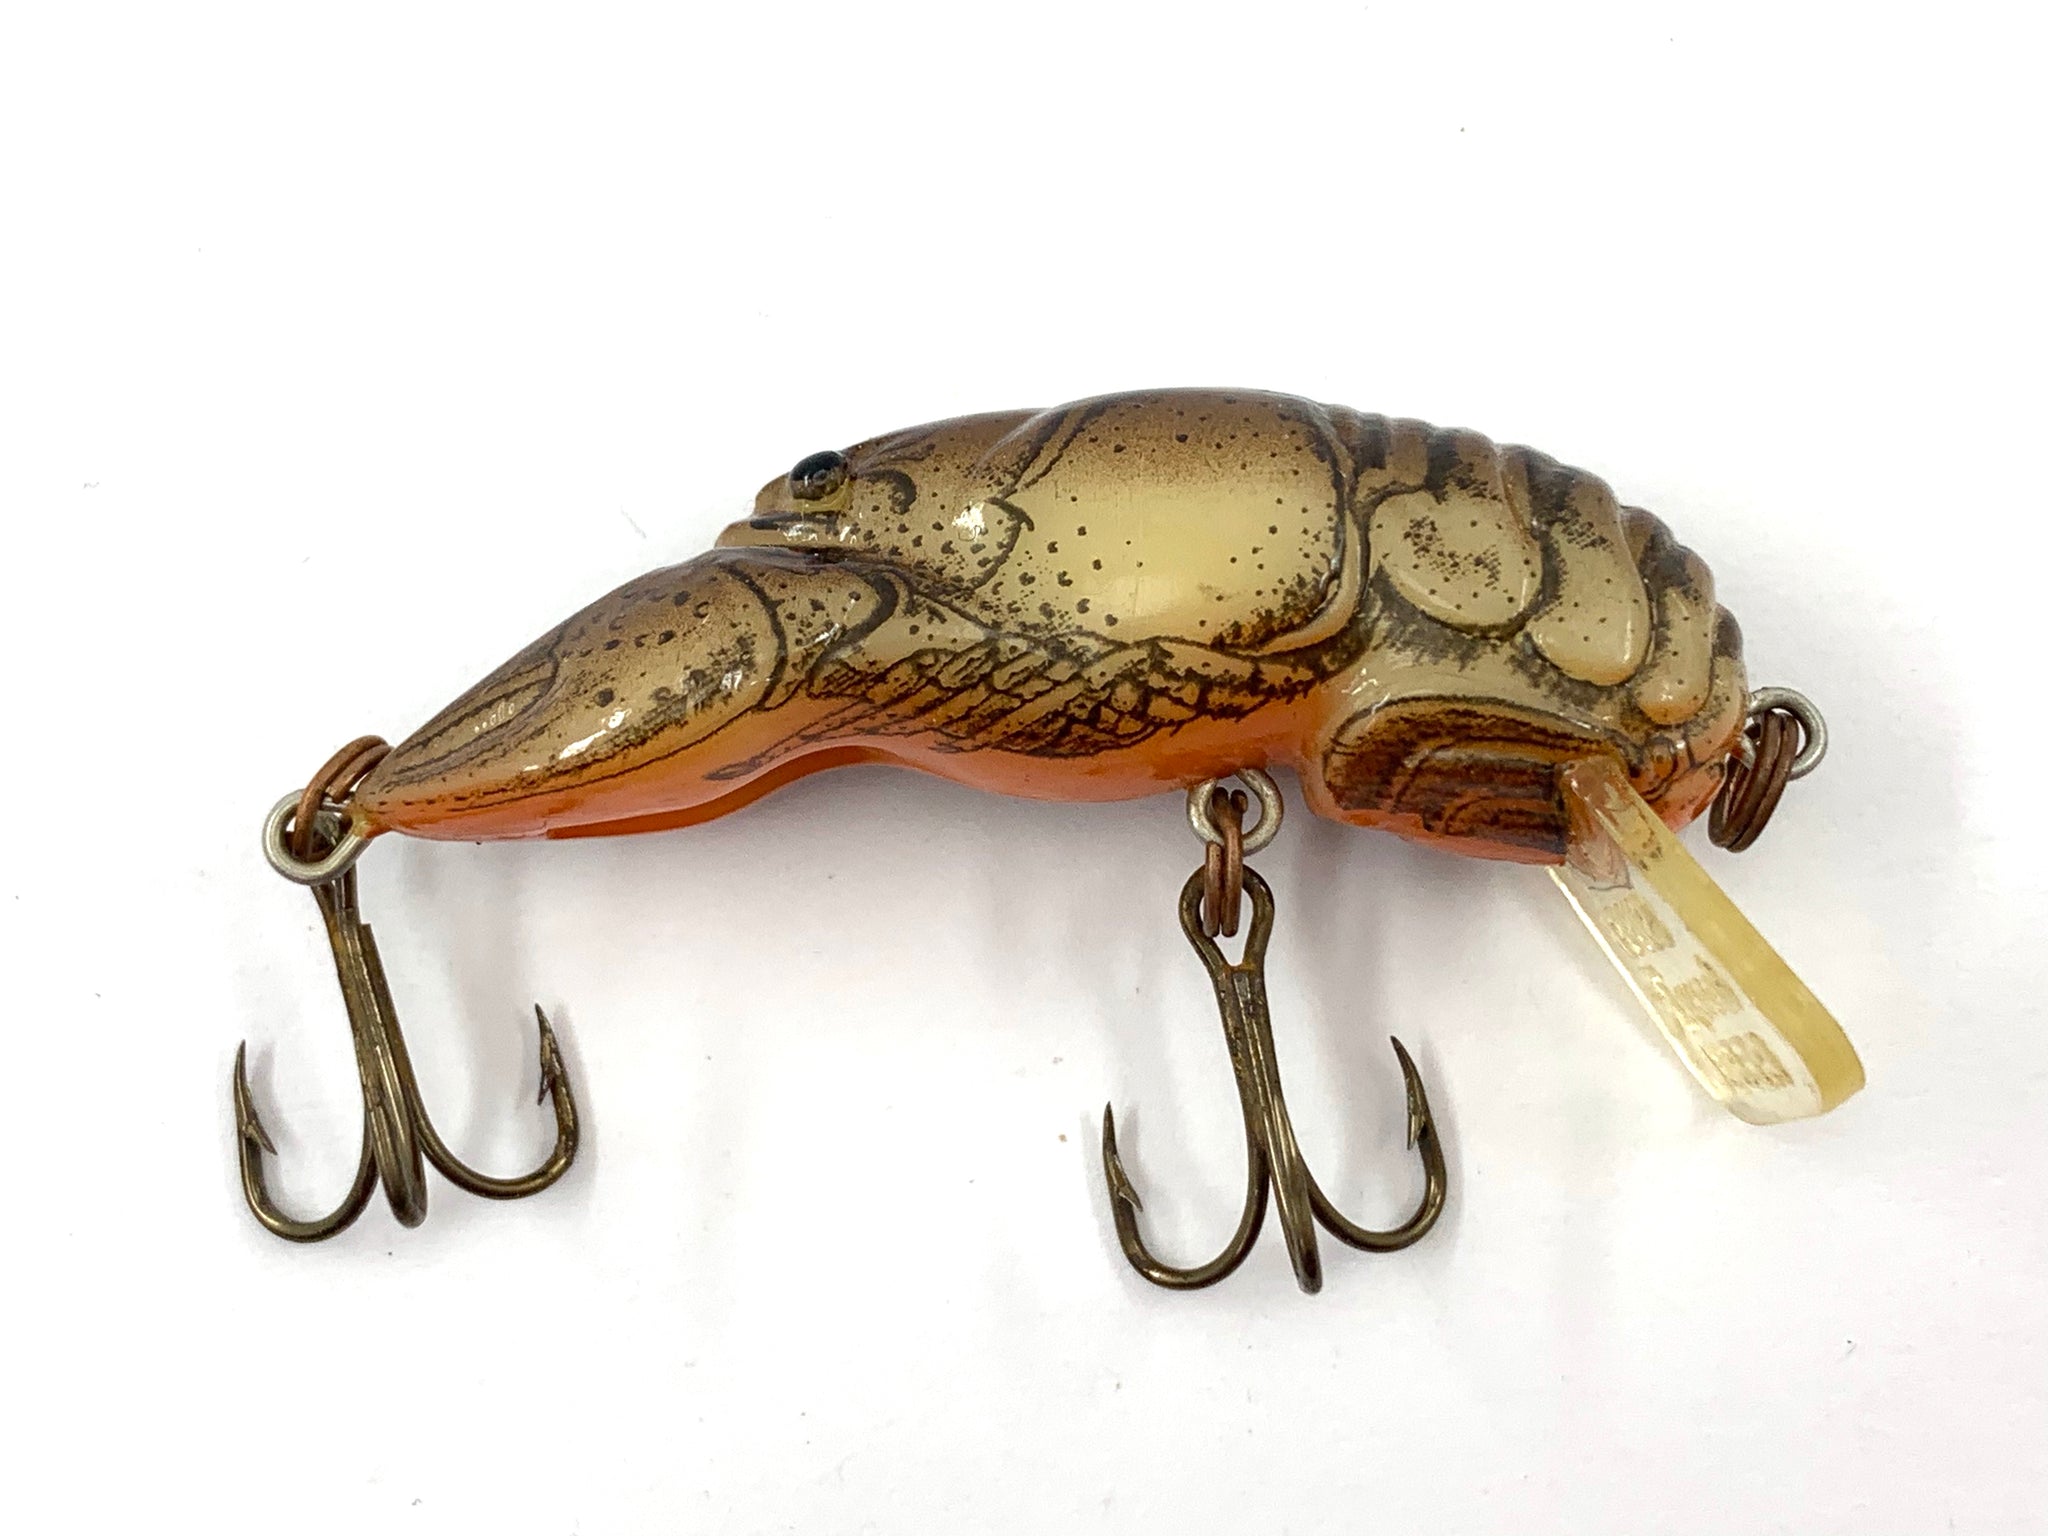 REBEL LURES Square Lip Crawdad Fishing Lure • Brown Crayfish – Toad Tackle